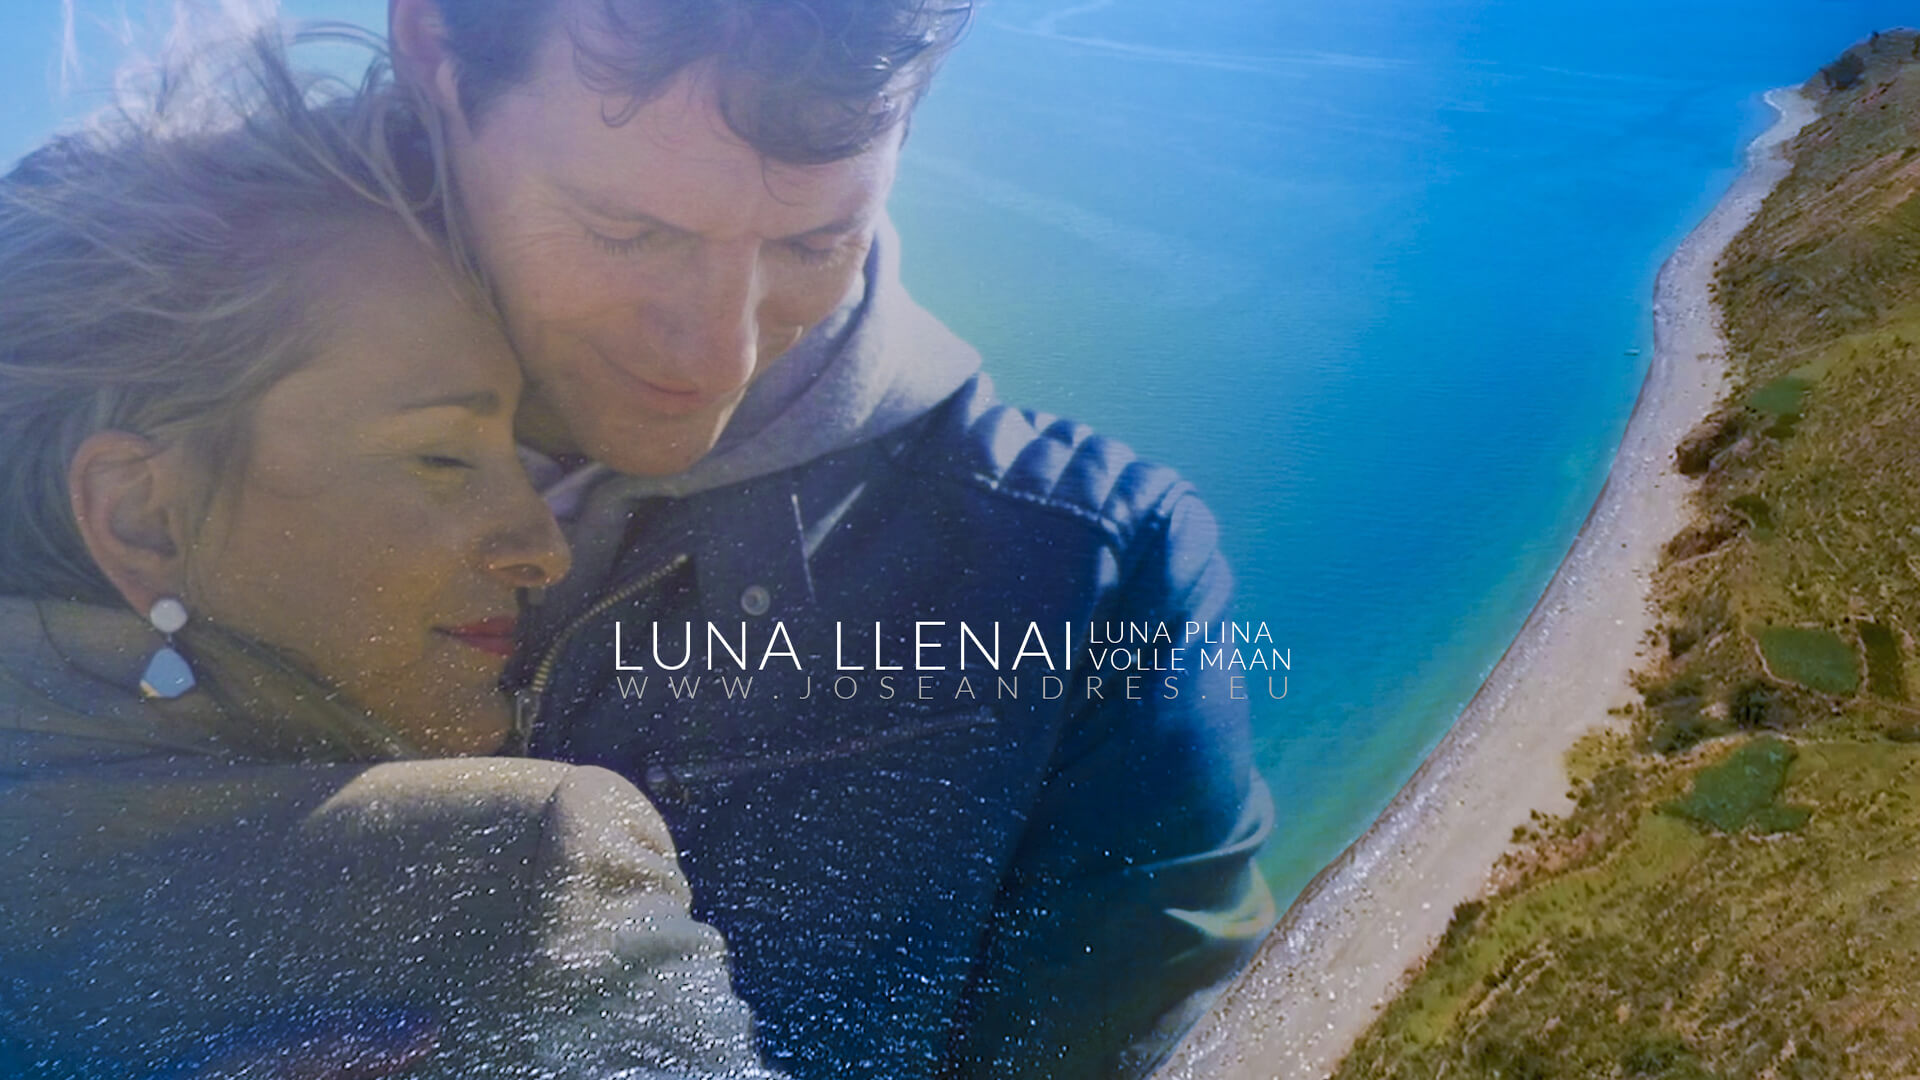 008 - Luna llena - Bianca y Pieter